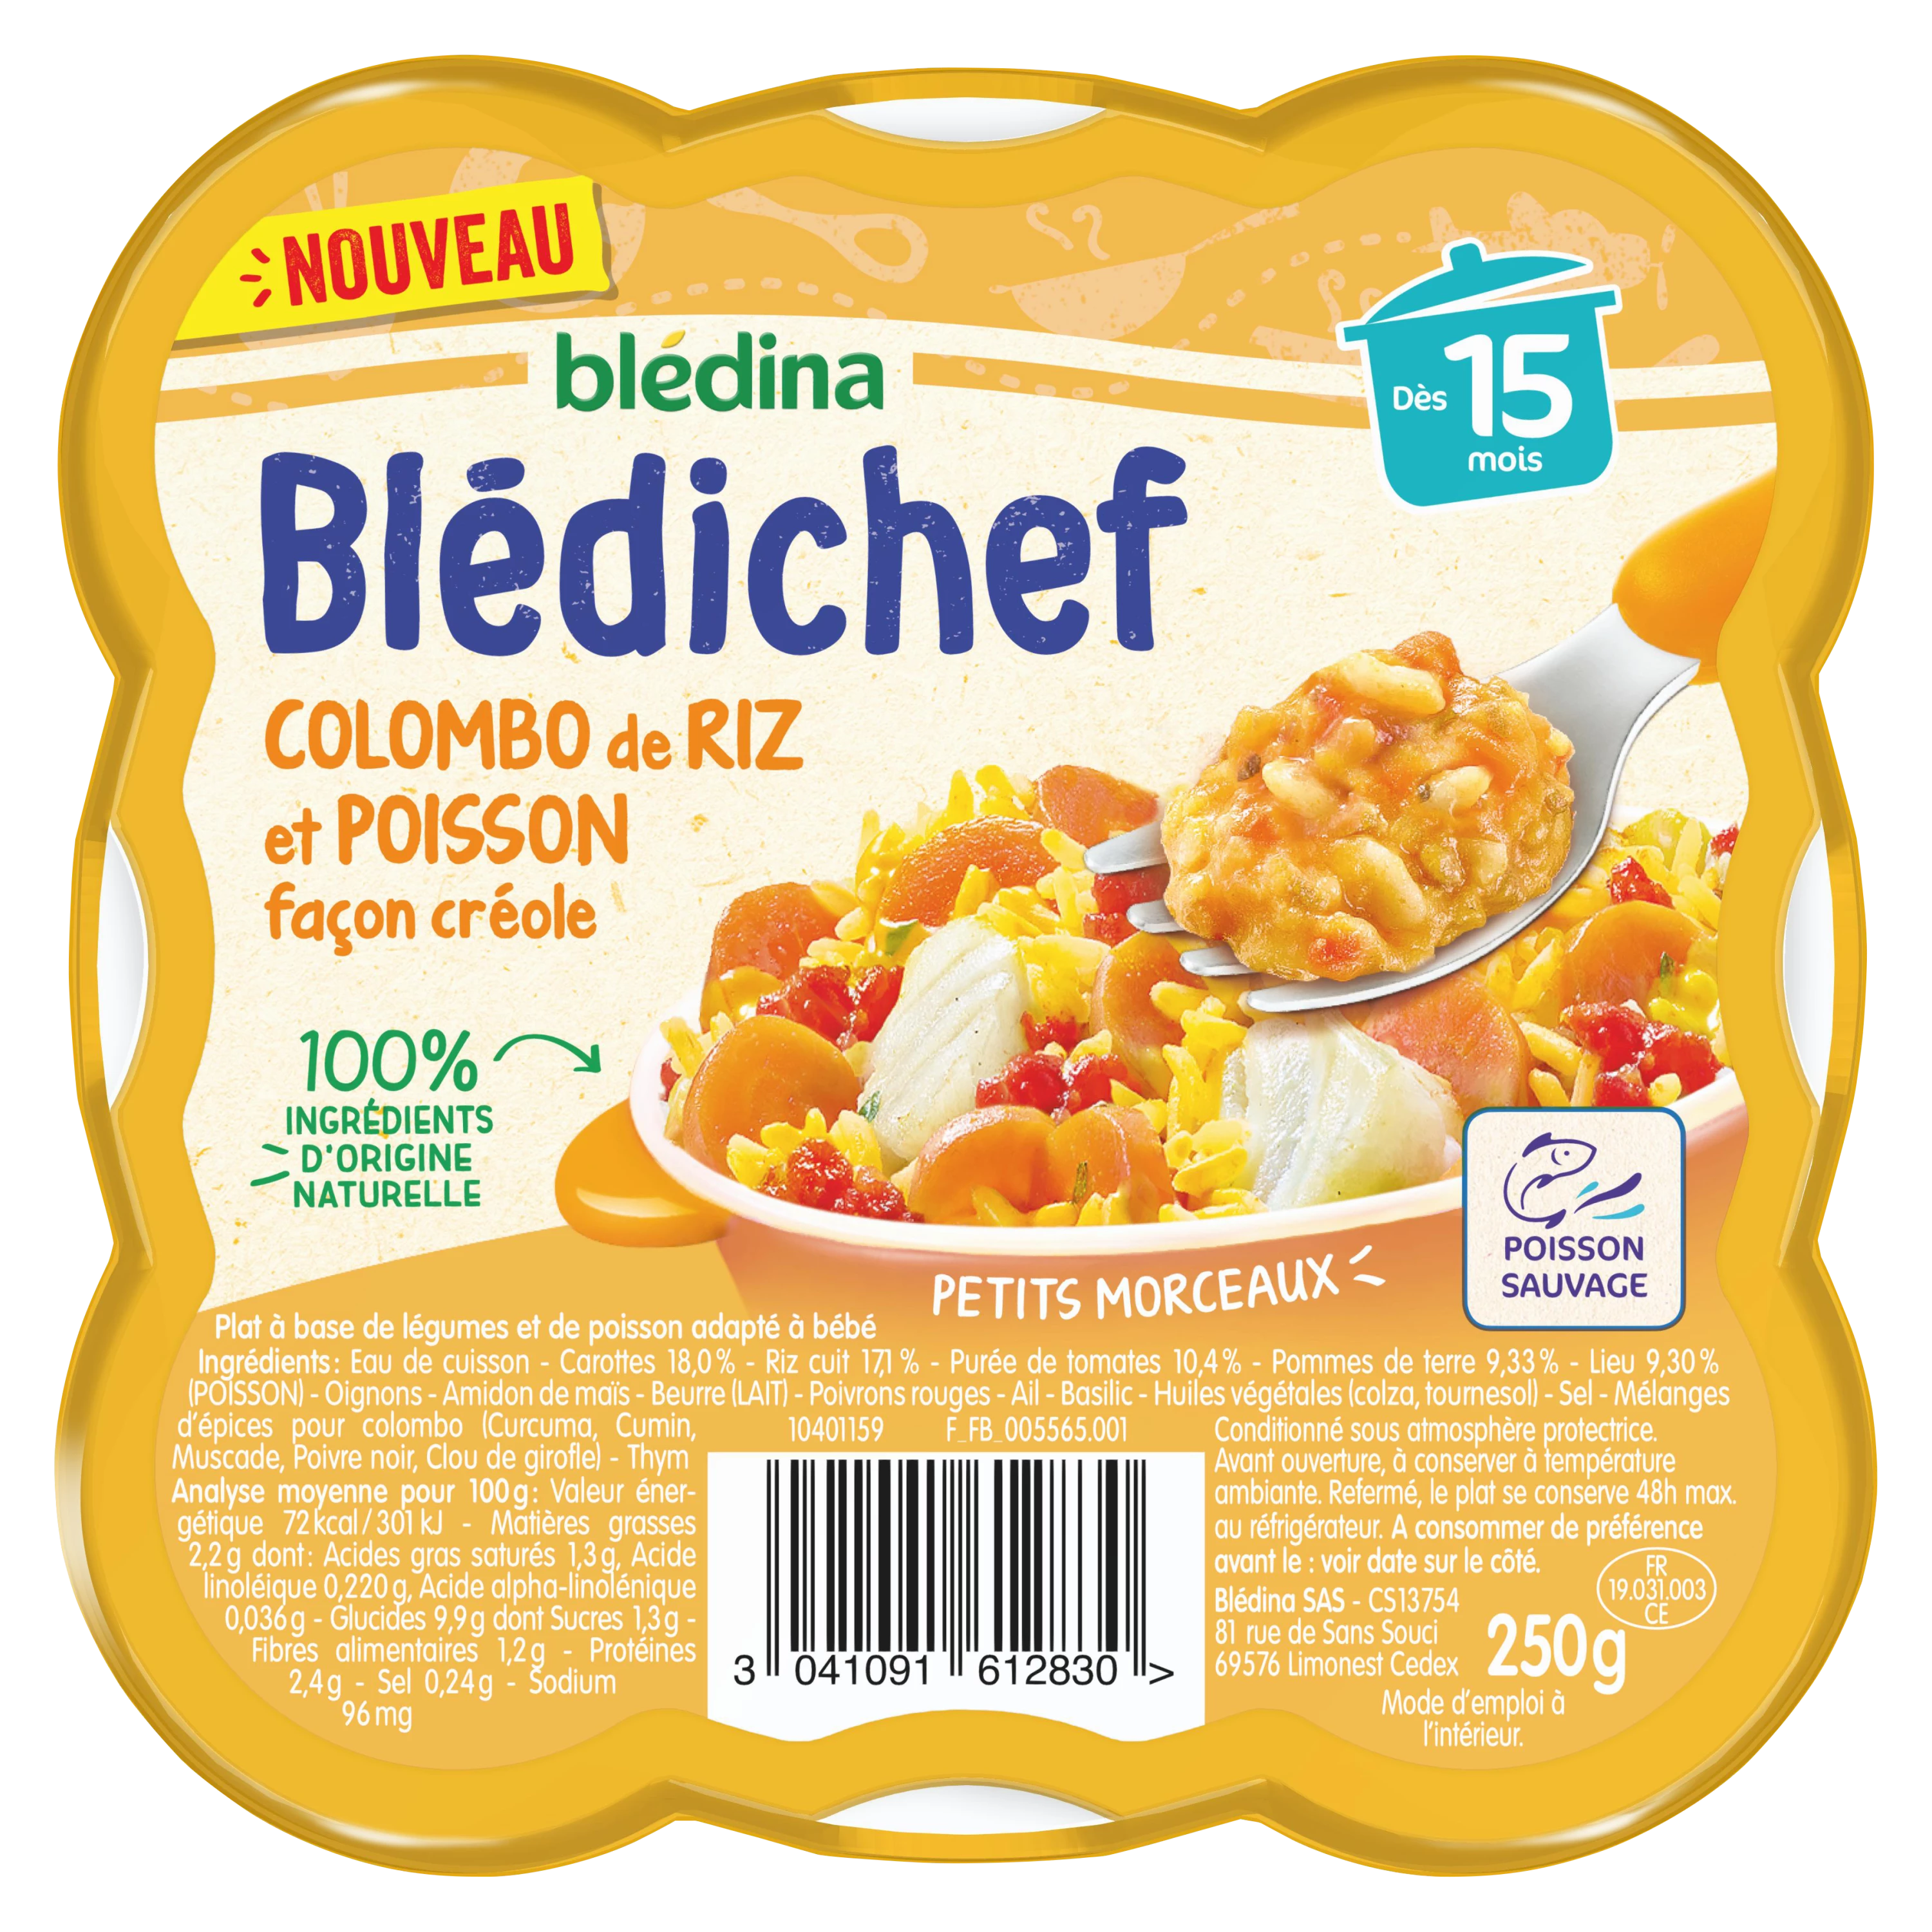 Blédichef 科伦坡 15 个月婴儿菜肴，克里奥尔风格米饭和鱼 250 克 - BLEDINA